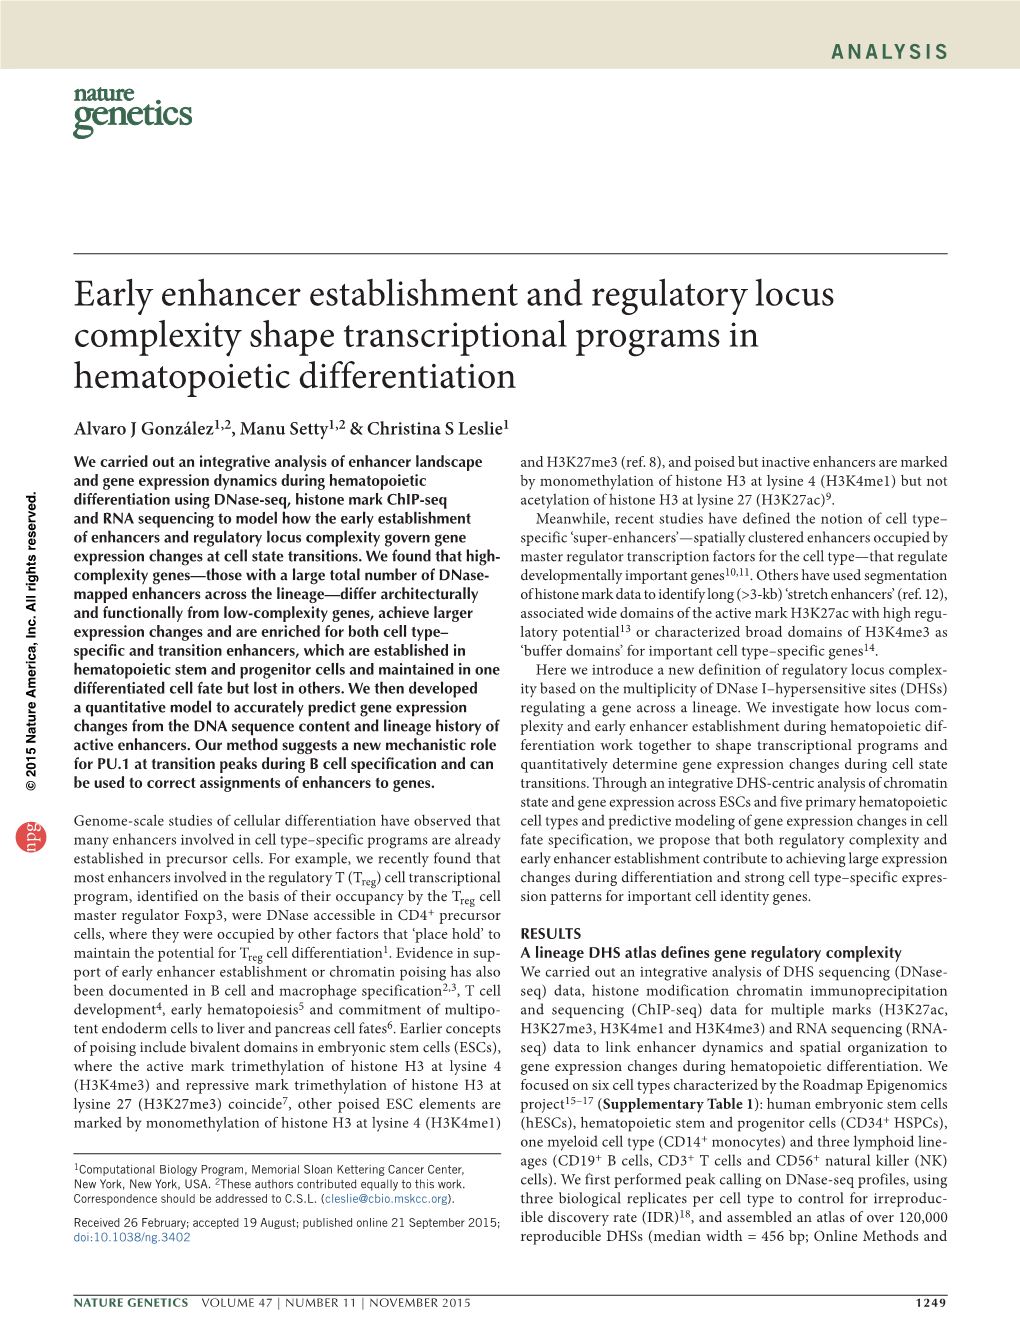 Early Enhancer Establishment and Regulatory Locus Complexity Shape Transcriptional Programs in Hematopoietic Differentiation